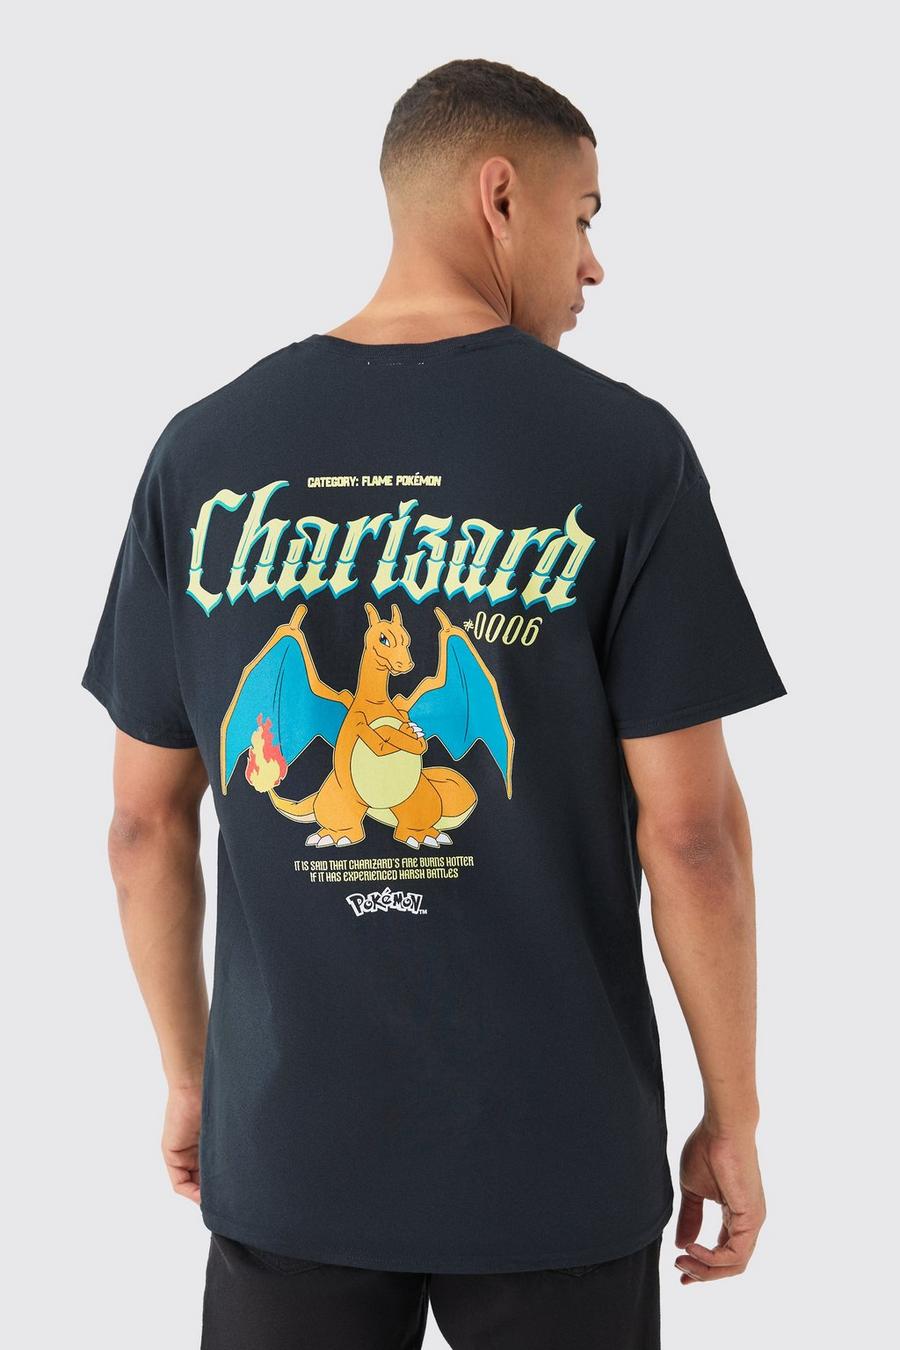 T-shirt oversize ufficiale di Pokemon Charizard, Black